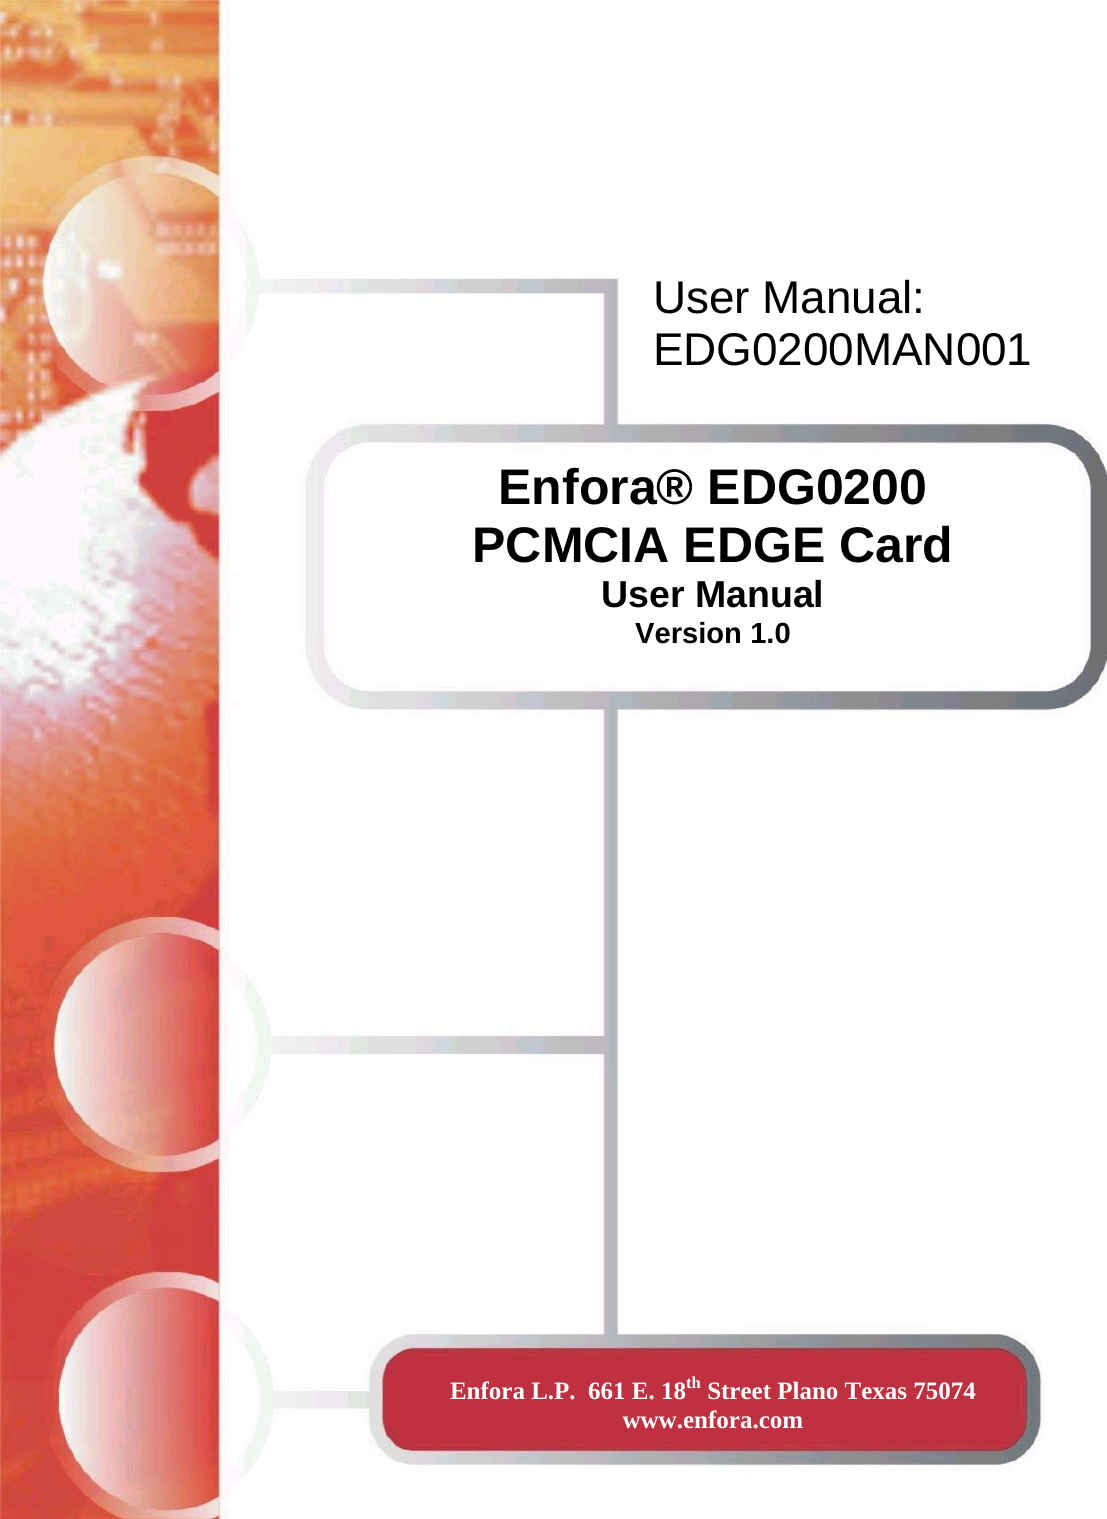    Enfora® EDG0200  PCMCIA EDGE Card User Manual Version 1.0 Enfora L.P.  661 E. 18th Street Plano Texas 75074   www.enfora.com User Manual: EDG0200MAN001 